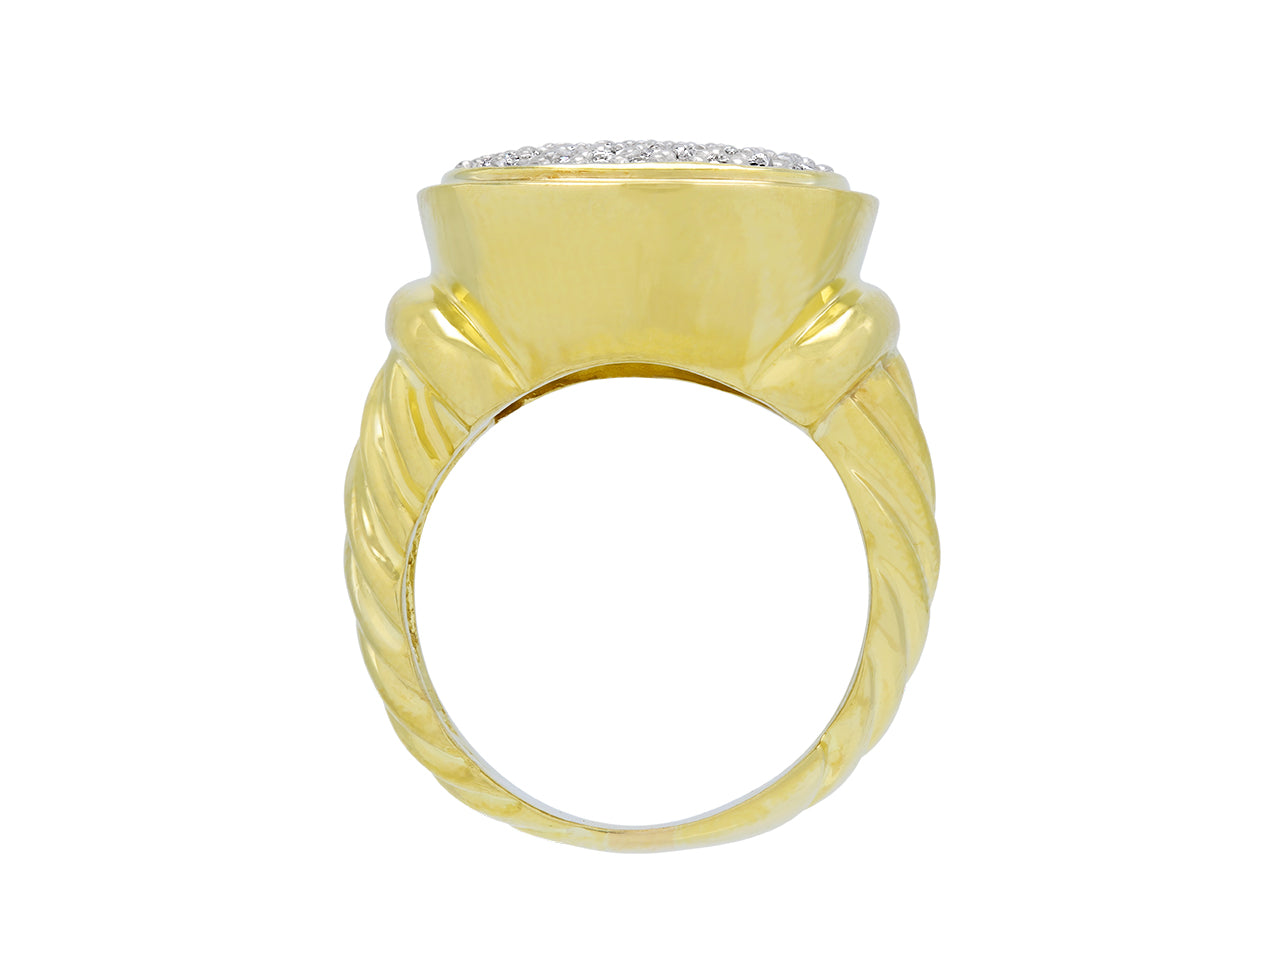 David Yurman 'Noblesse' Pave Diamond Ring in 18K Gold